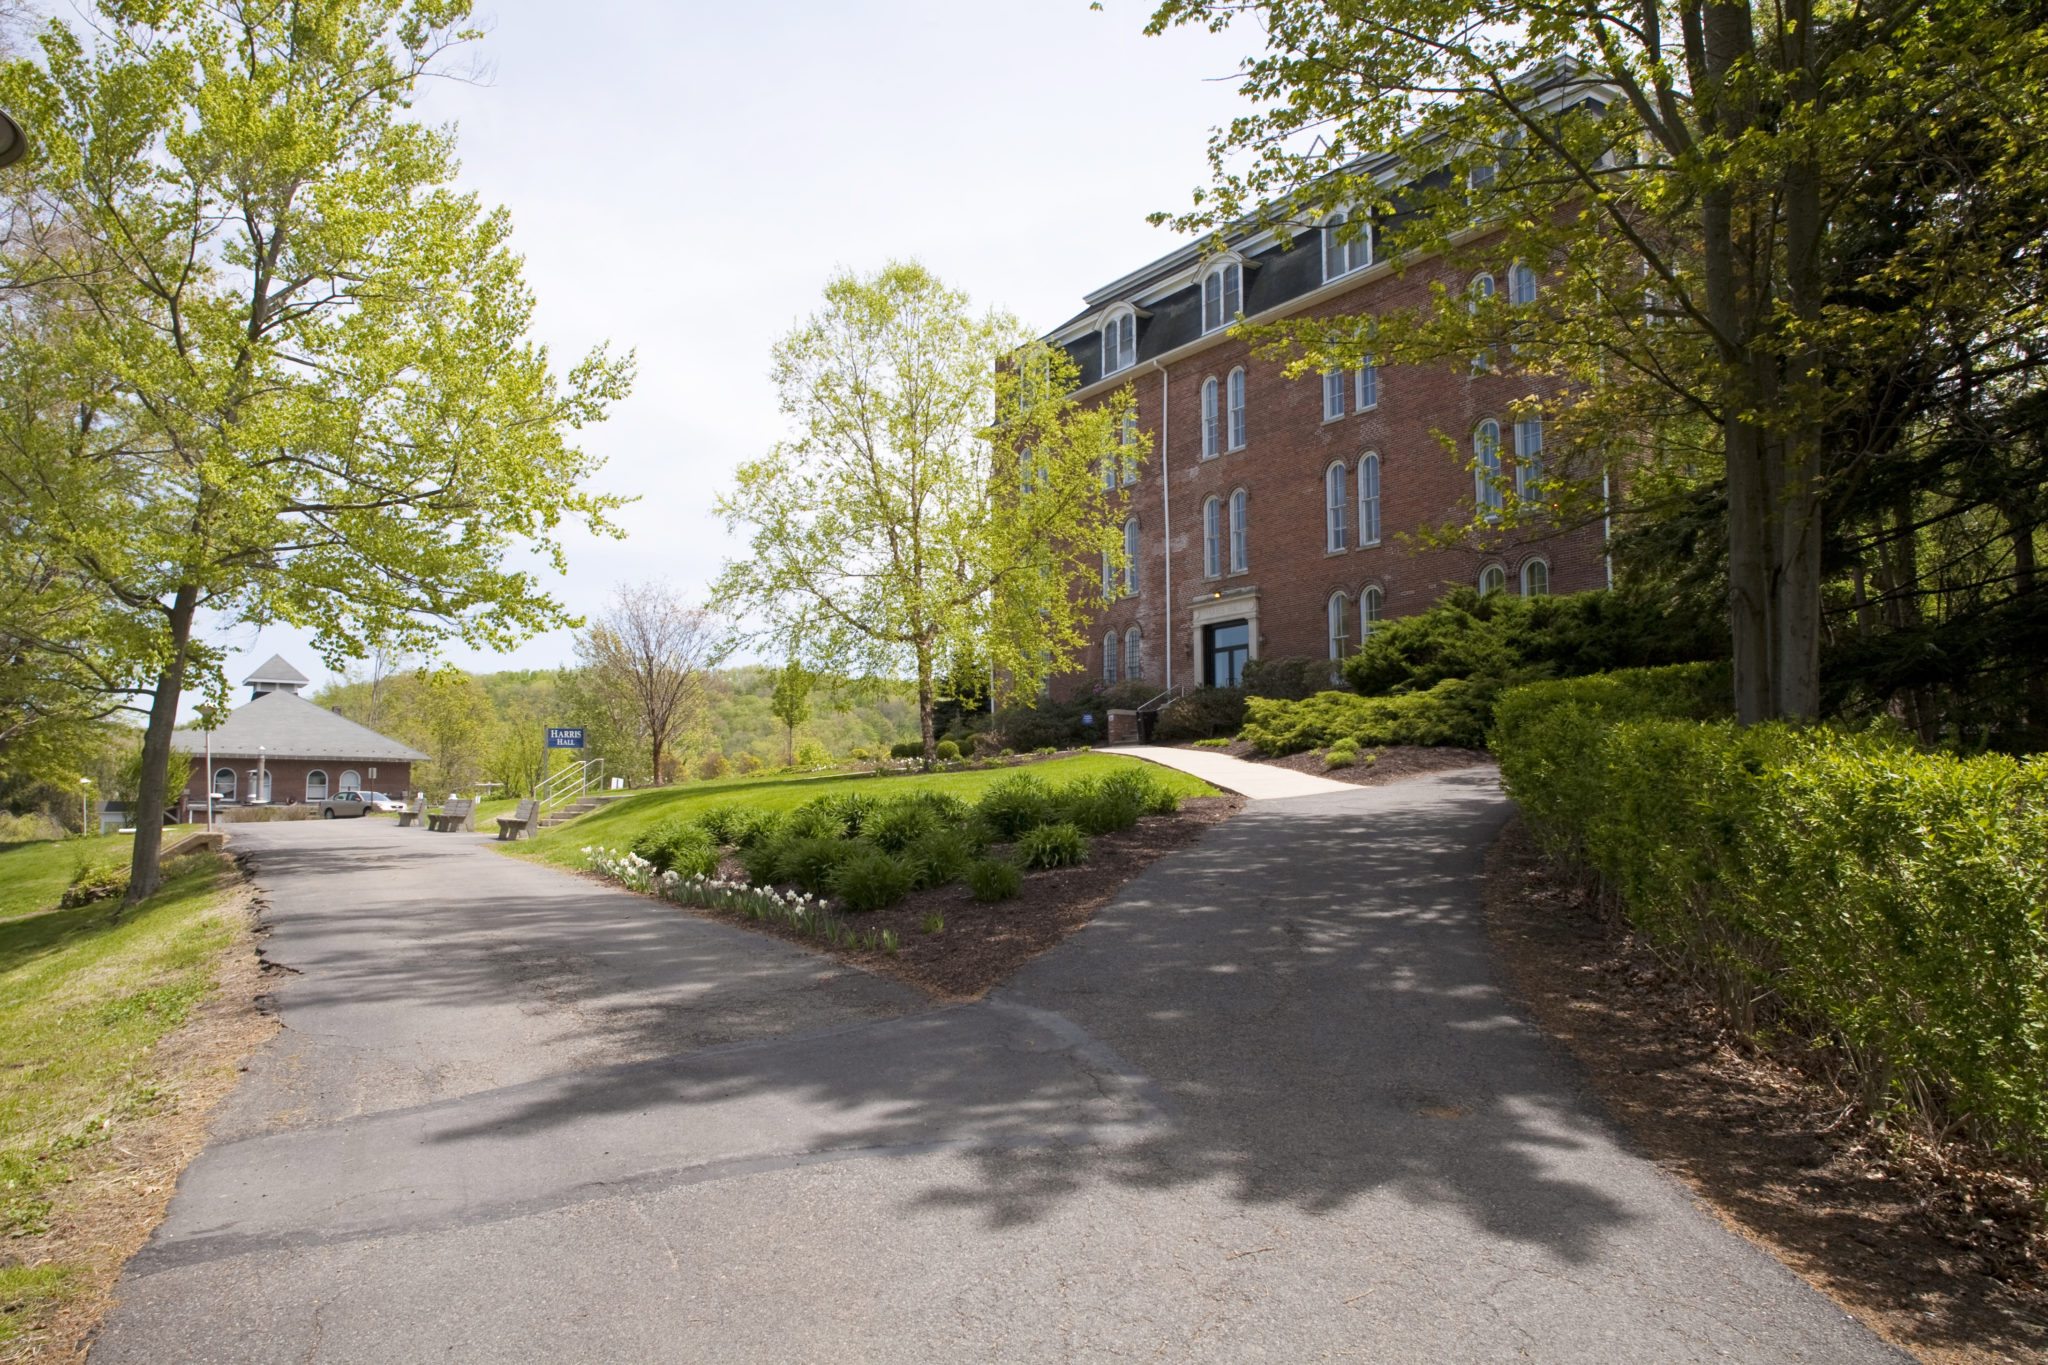 Two walk ways lead too two brick buildings on Keystone College campus